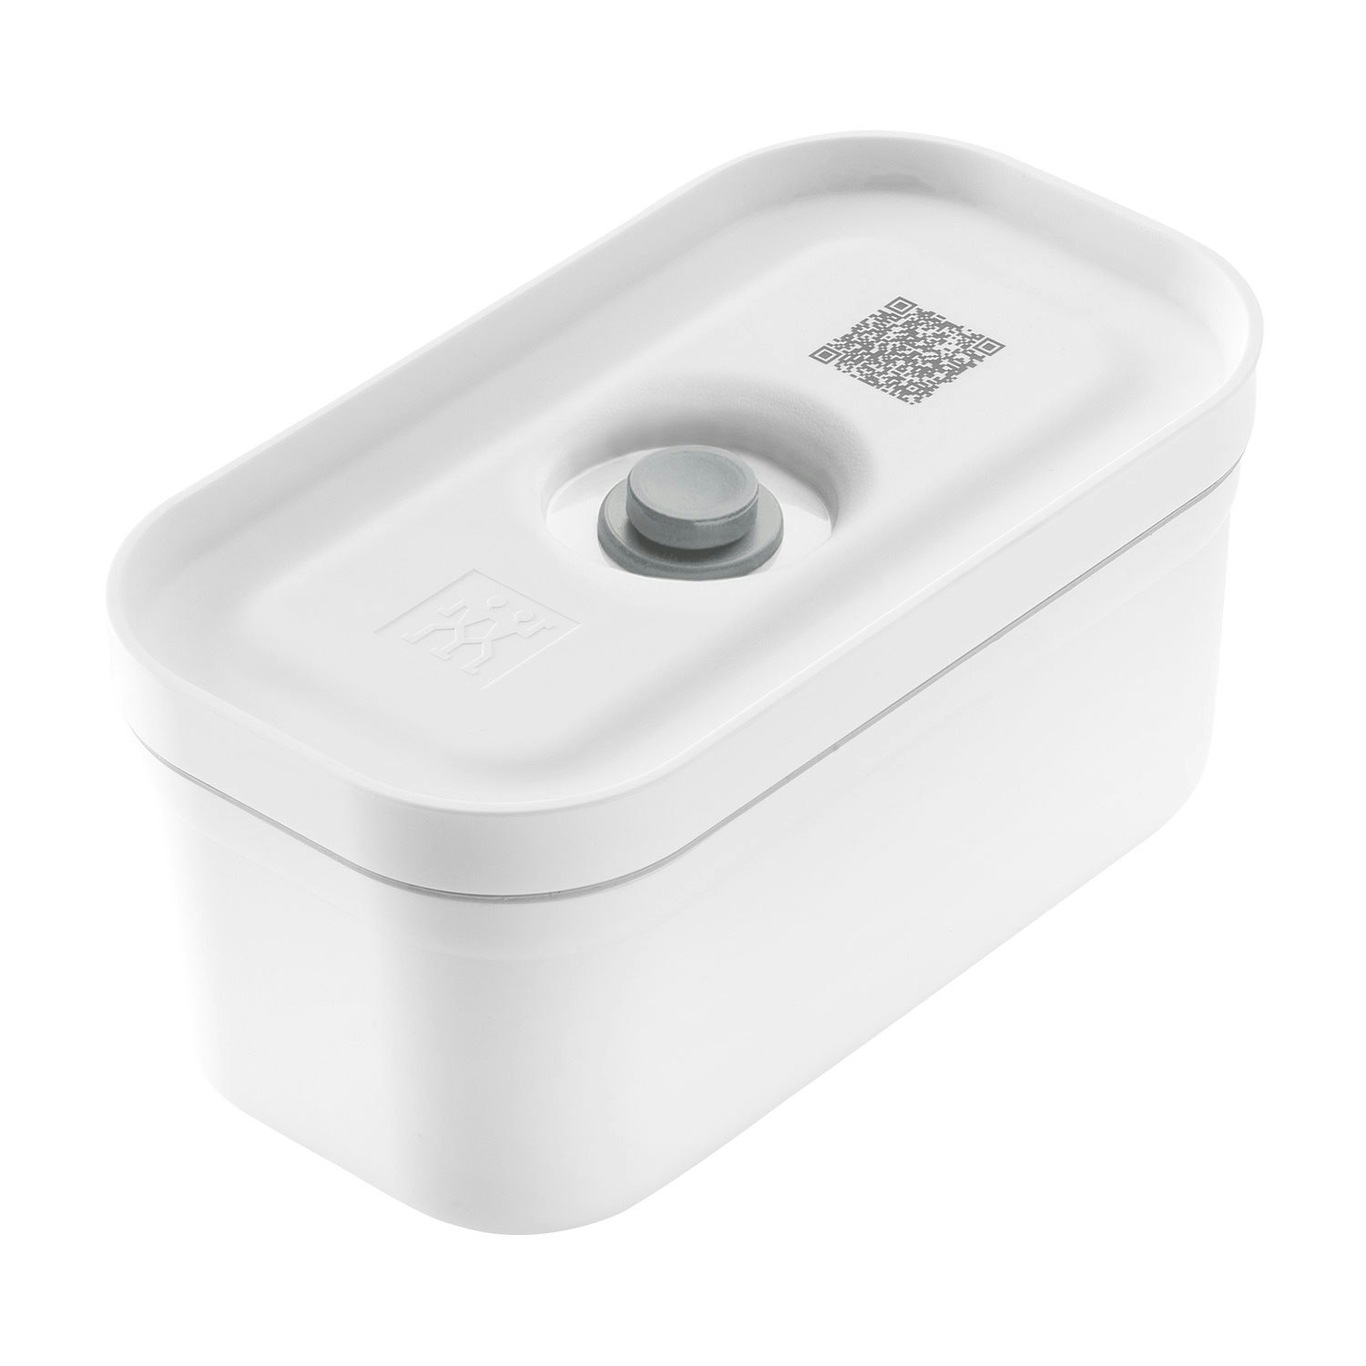 https://royaldesign.com/image/2/zwilling-fresh-save-lunch-box-plastic-1?w=800&quality=80